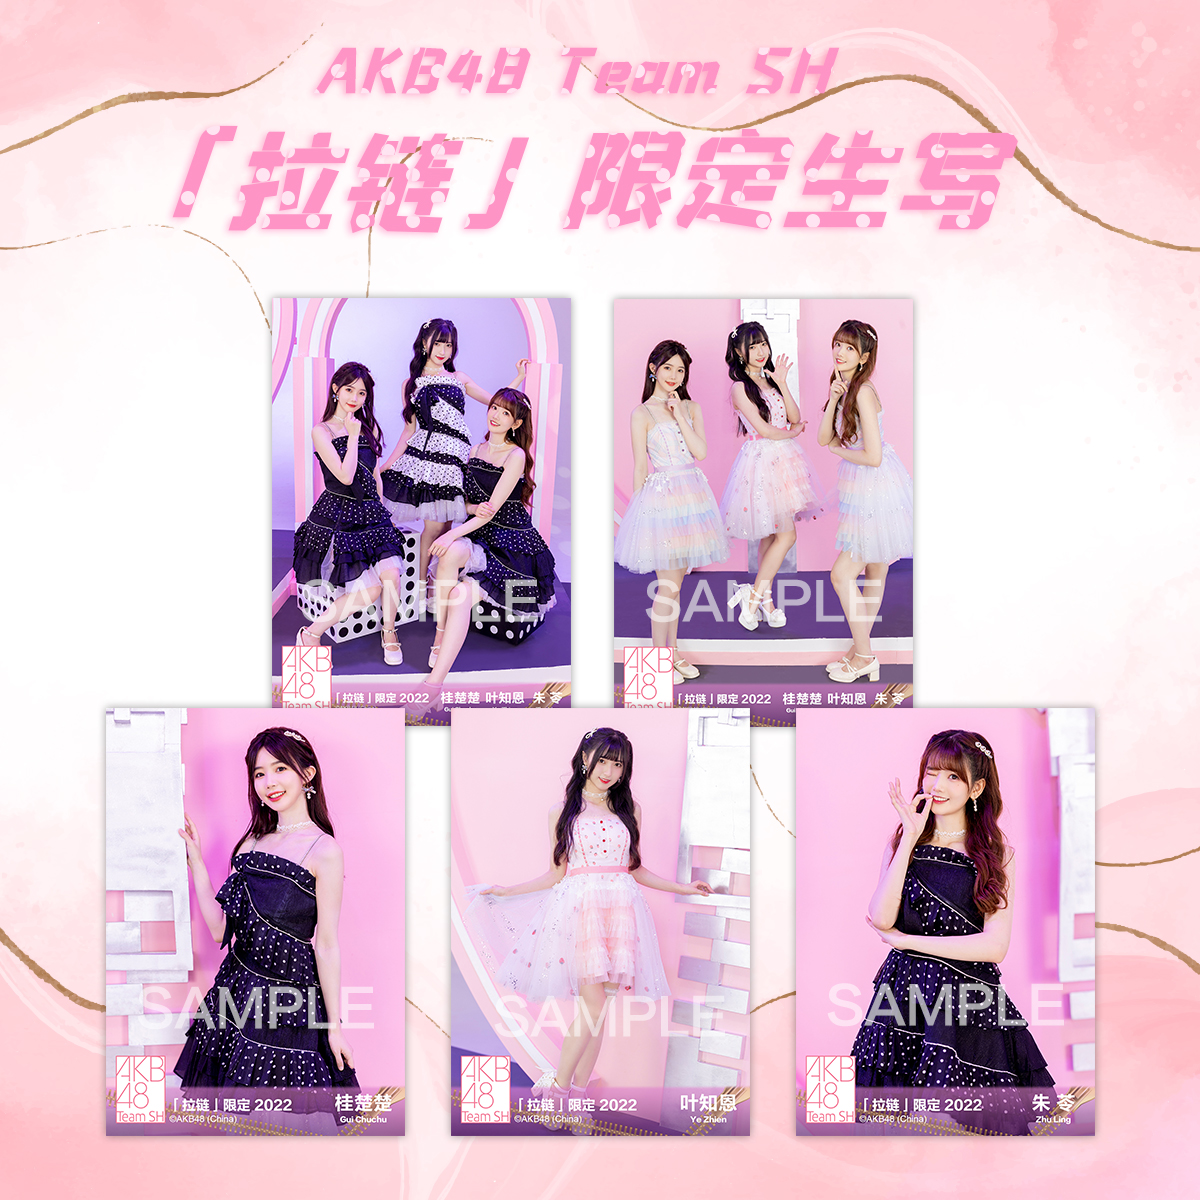 AKB48 Team SH《拉链》限定生写